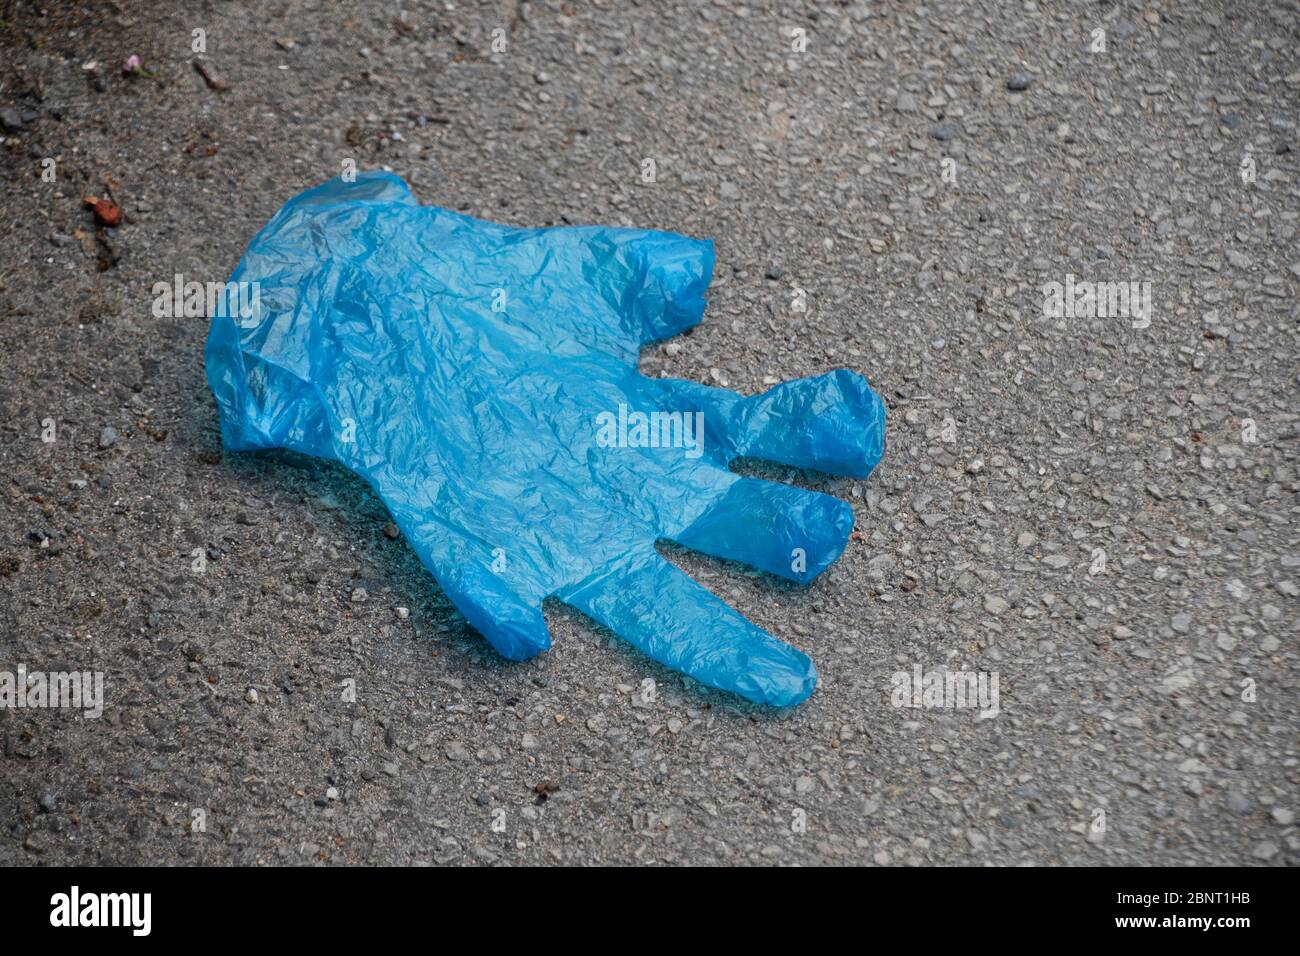 Sheffield UK – Mai 13 2020: Verlassene blaue Gummihandschuhe auf dem Boden weggeworfen, wird Schutzausrüstung während des Coronavirus Covid-19 pandem zu Abfall Stockfoto